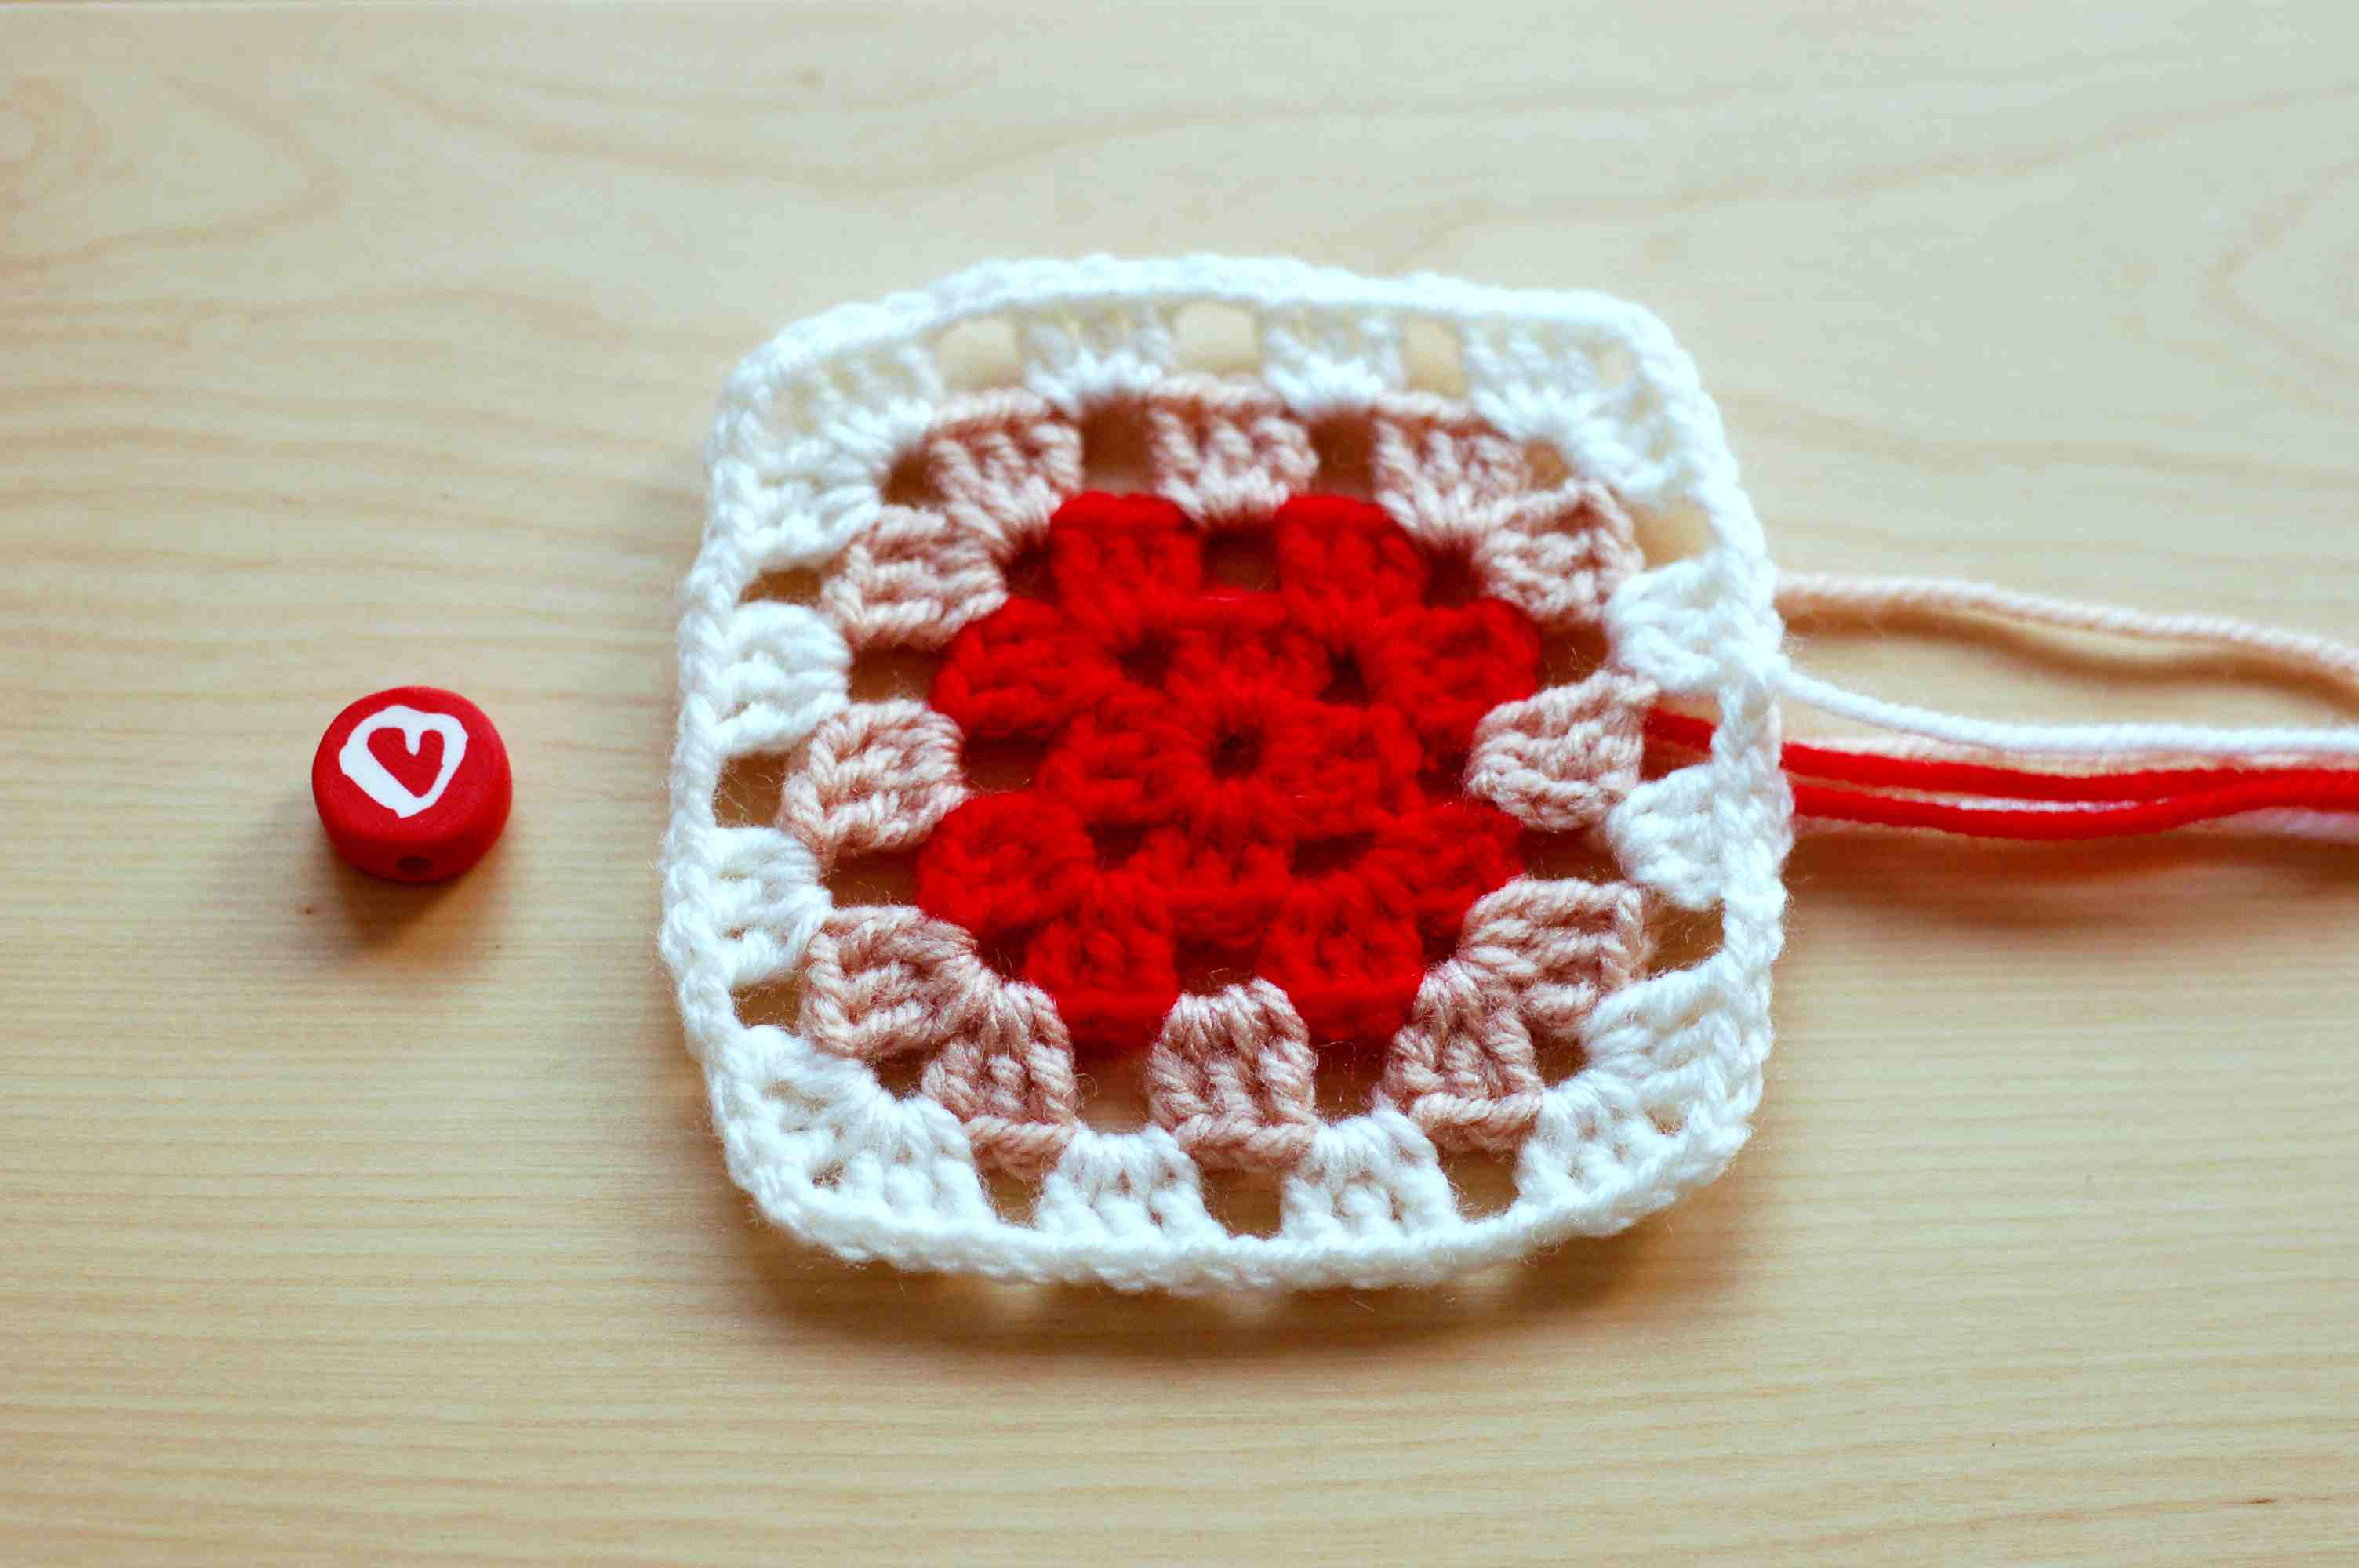 Crochet Monkey Blanket Pattern 35 Free Crochet Afghan Square Patterns